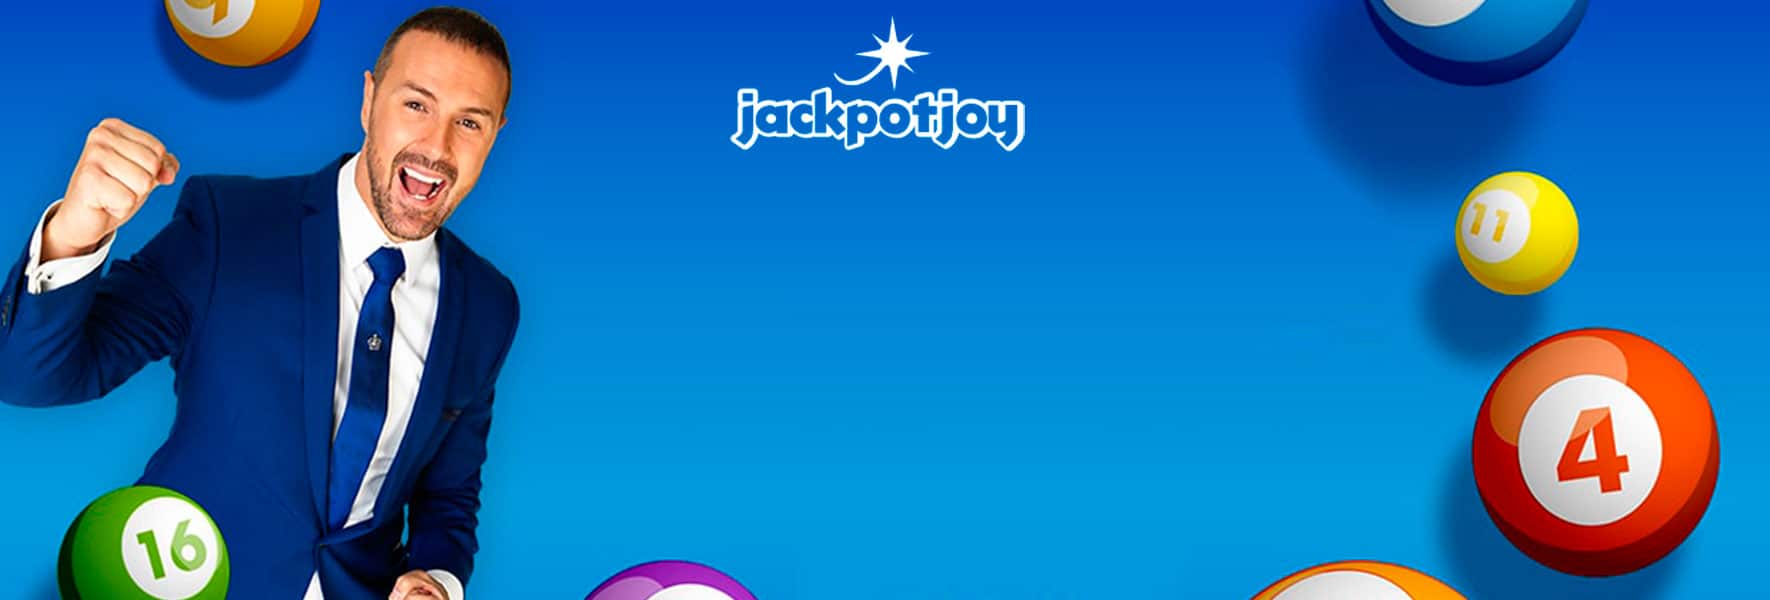 jackpotjoy slots free download